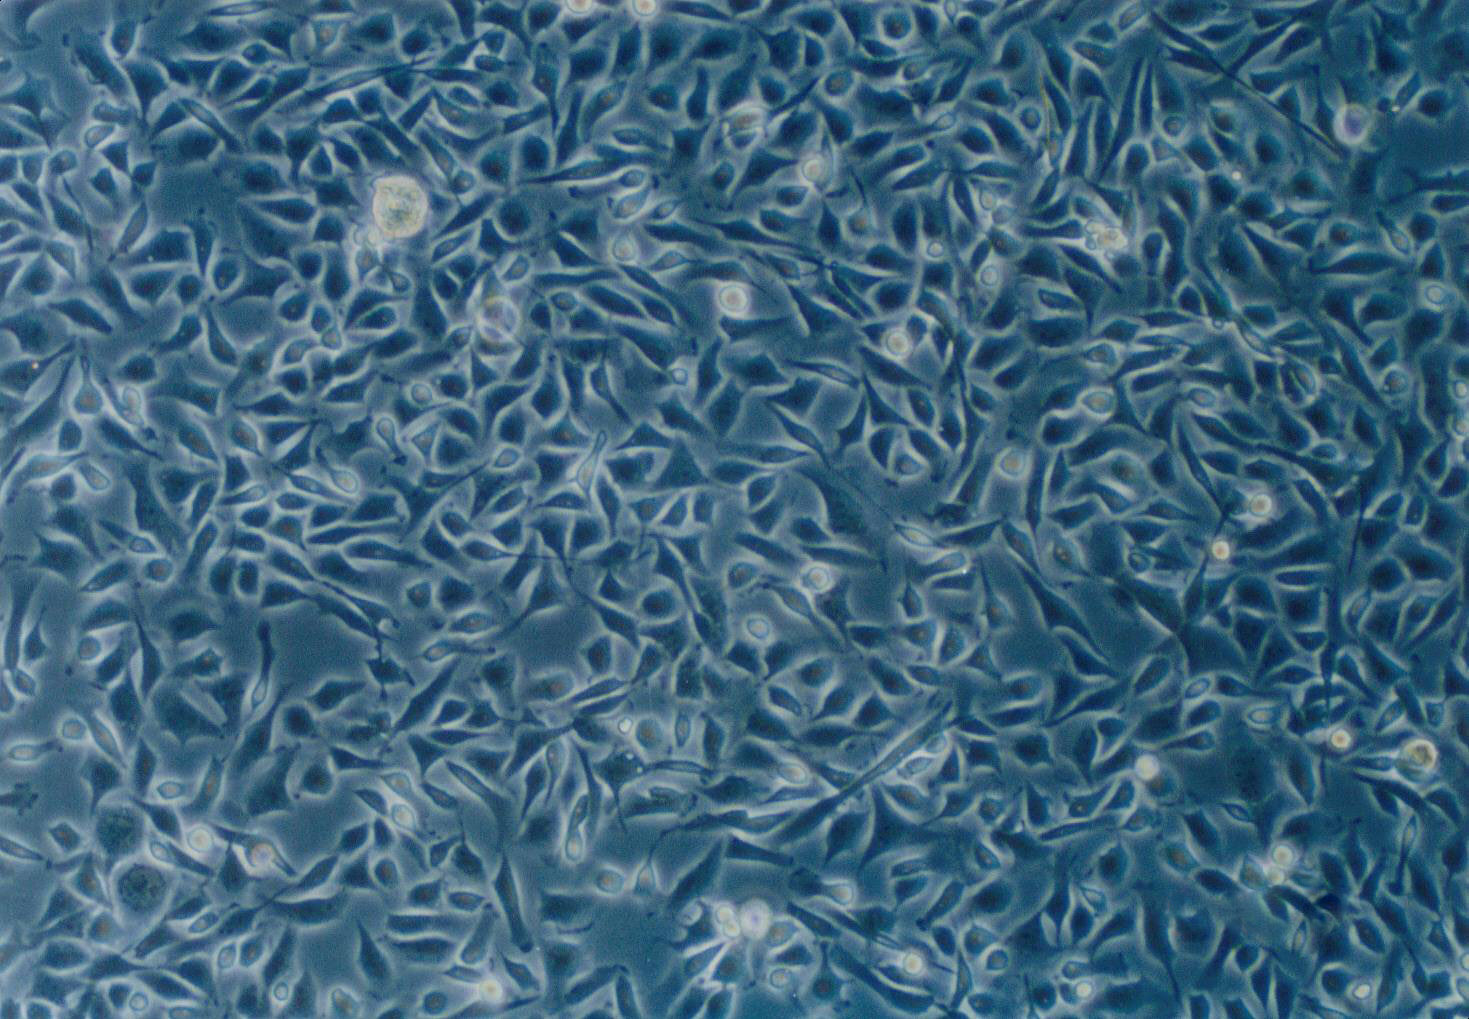 HBZY-1:大鼠肾小球系膜复苏细胞(提供STR鉴定图谱),HBZY-1